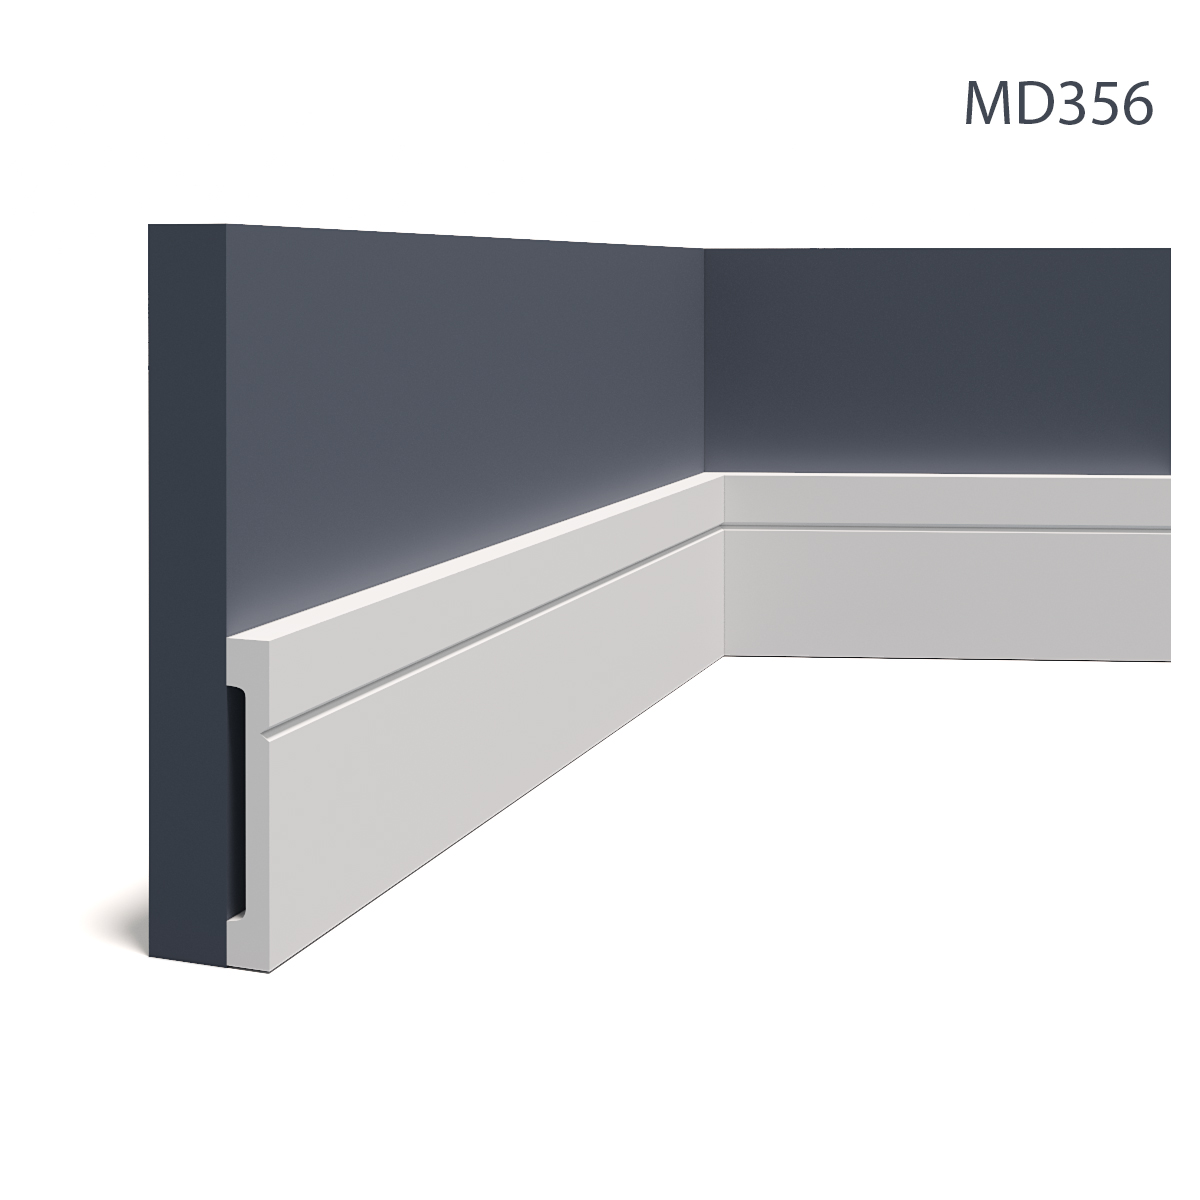 Plinta / Ancadrament usa MD356E, 240 X 10.8 X 1.6 cm, Mardom Decor, Plinte decorative 